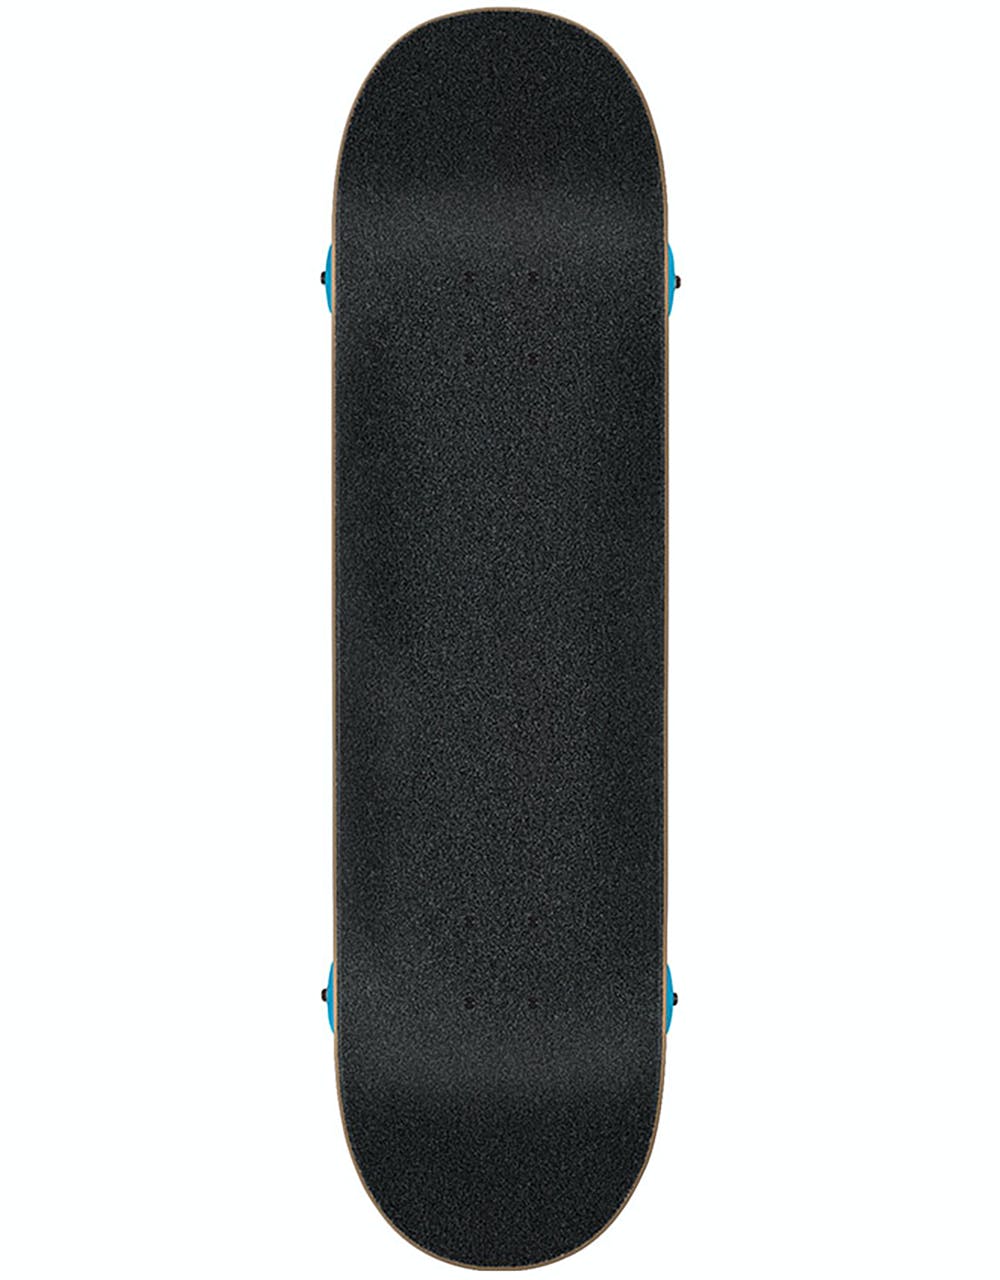 Santa Cruz Screaming Hand Mini Complete Skateboard - 7.25"